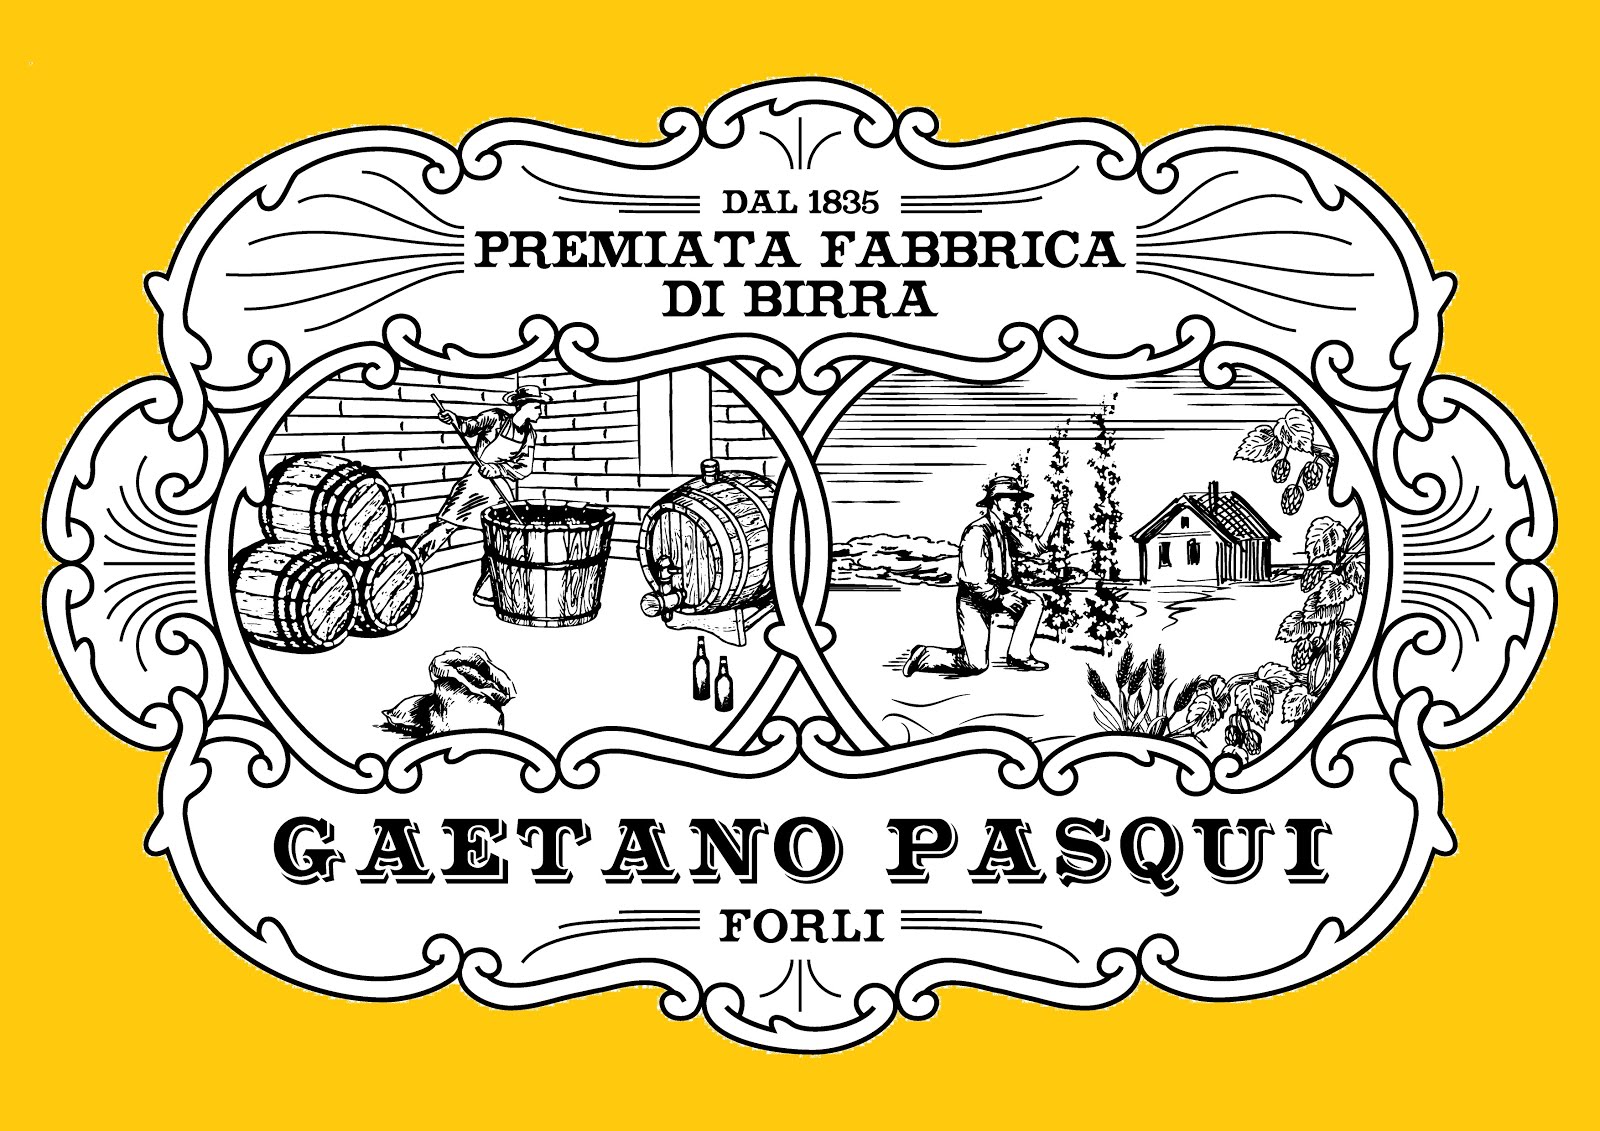 Premiata Fabbrica di Birra Gaetano Pasqui - Forlì